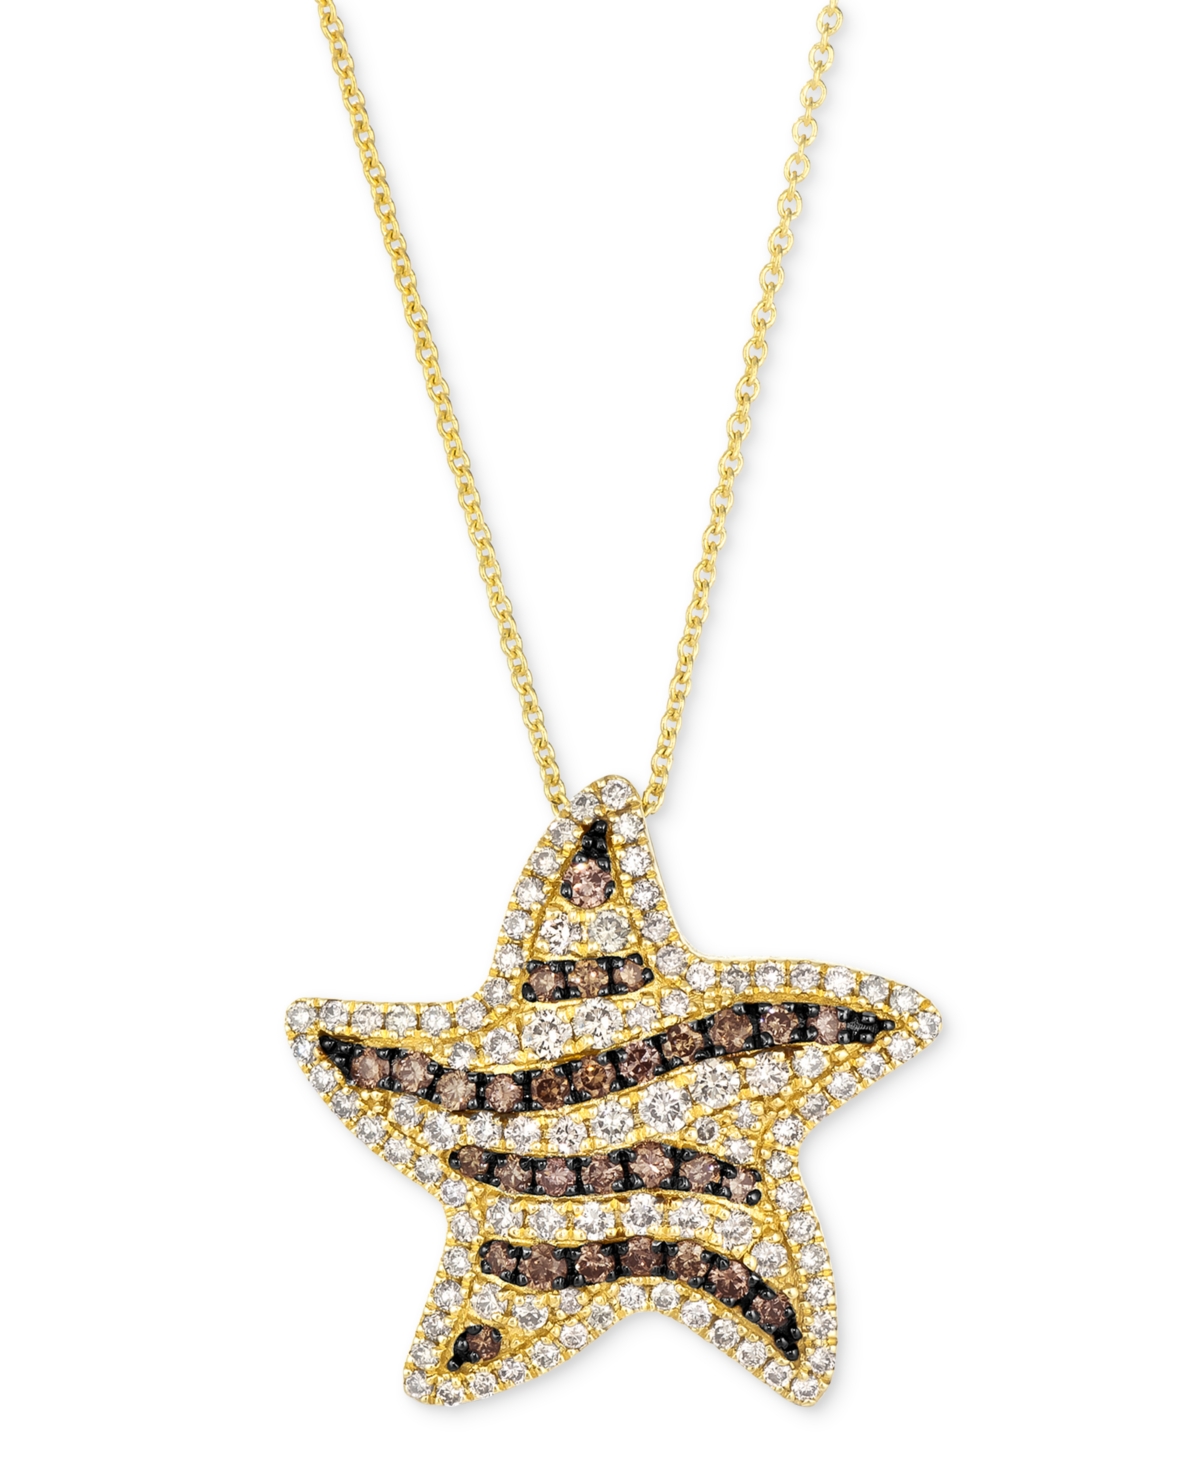 Godiva x Le Vian Chocolate Diamond & Nude Diamond Star Adjustable 20" Pendant Necklace (1 ct. t.w.) in 14k Gold - K Honey Gold Pendant